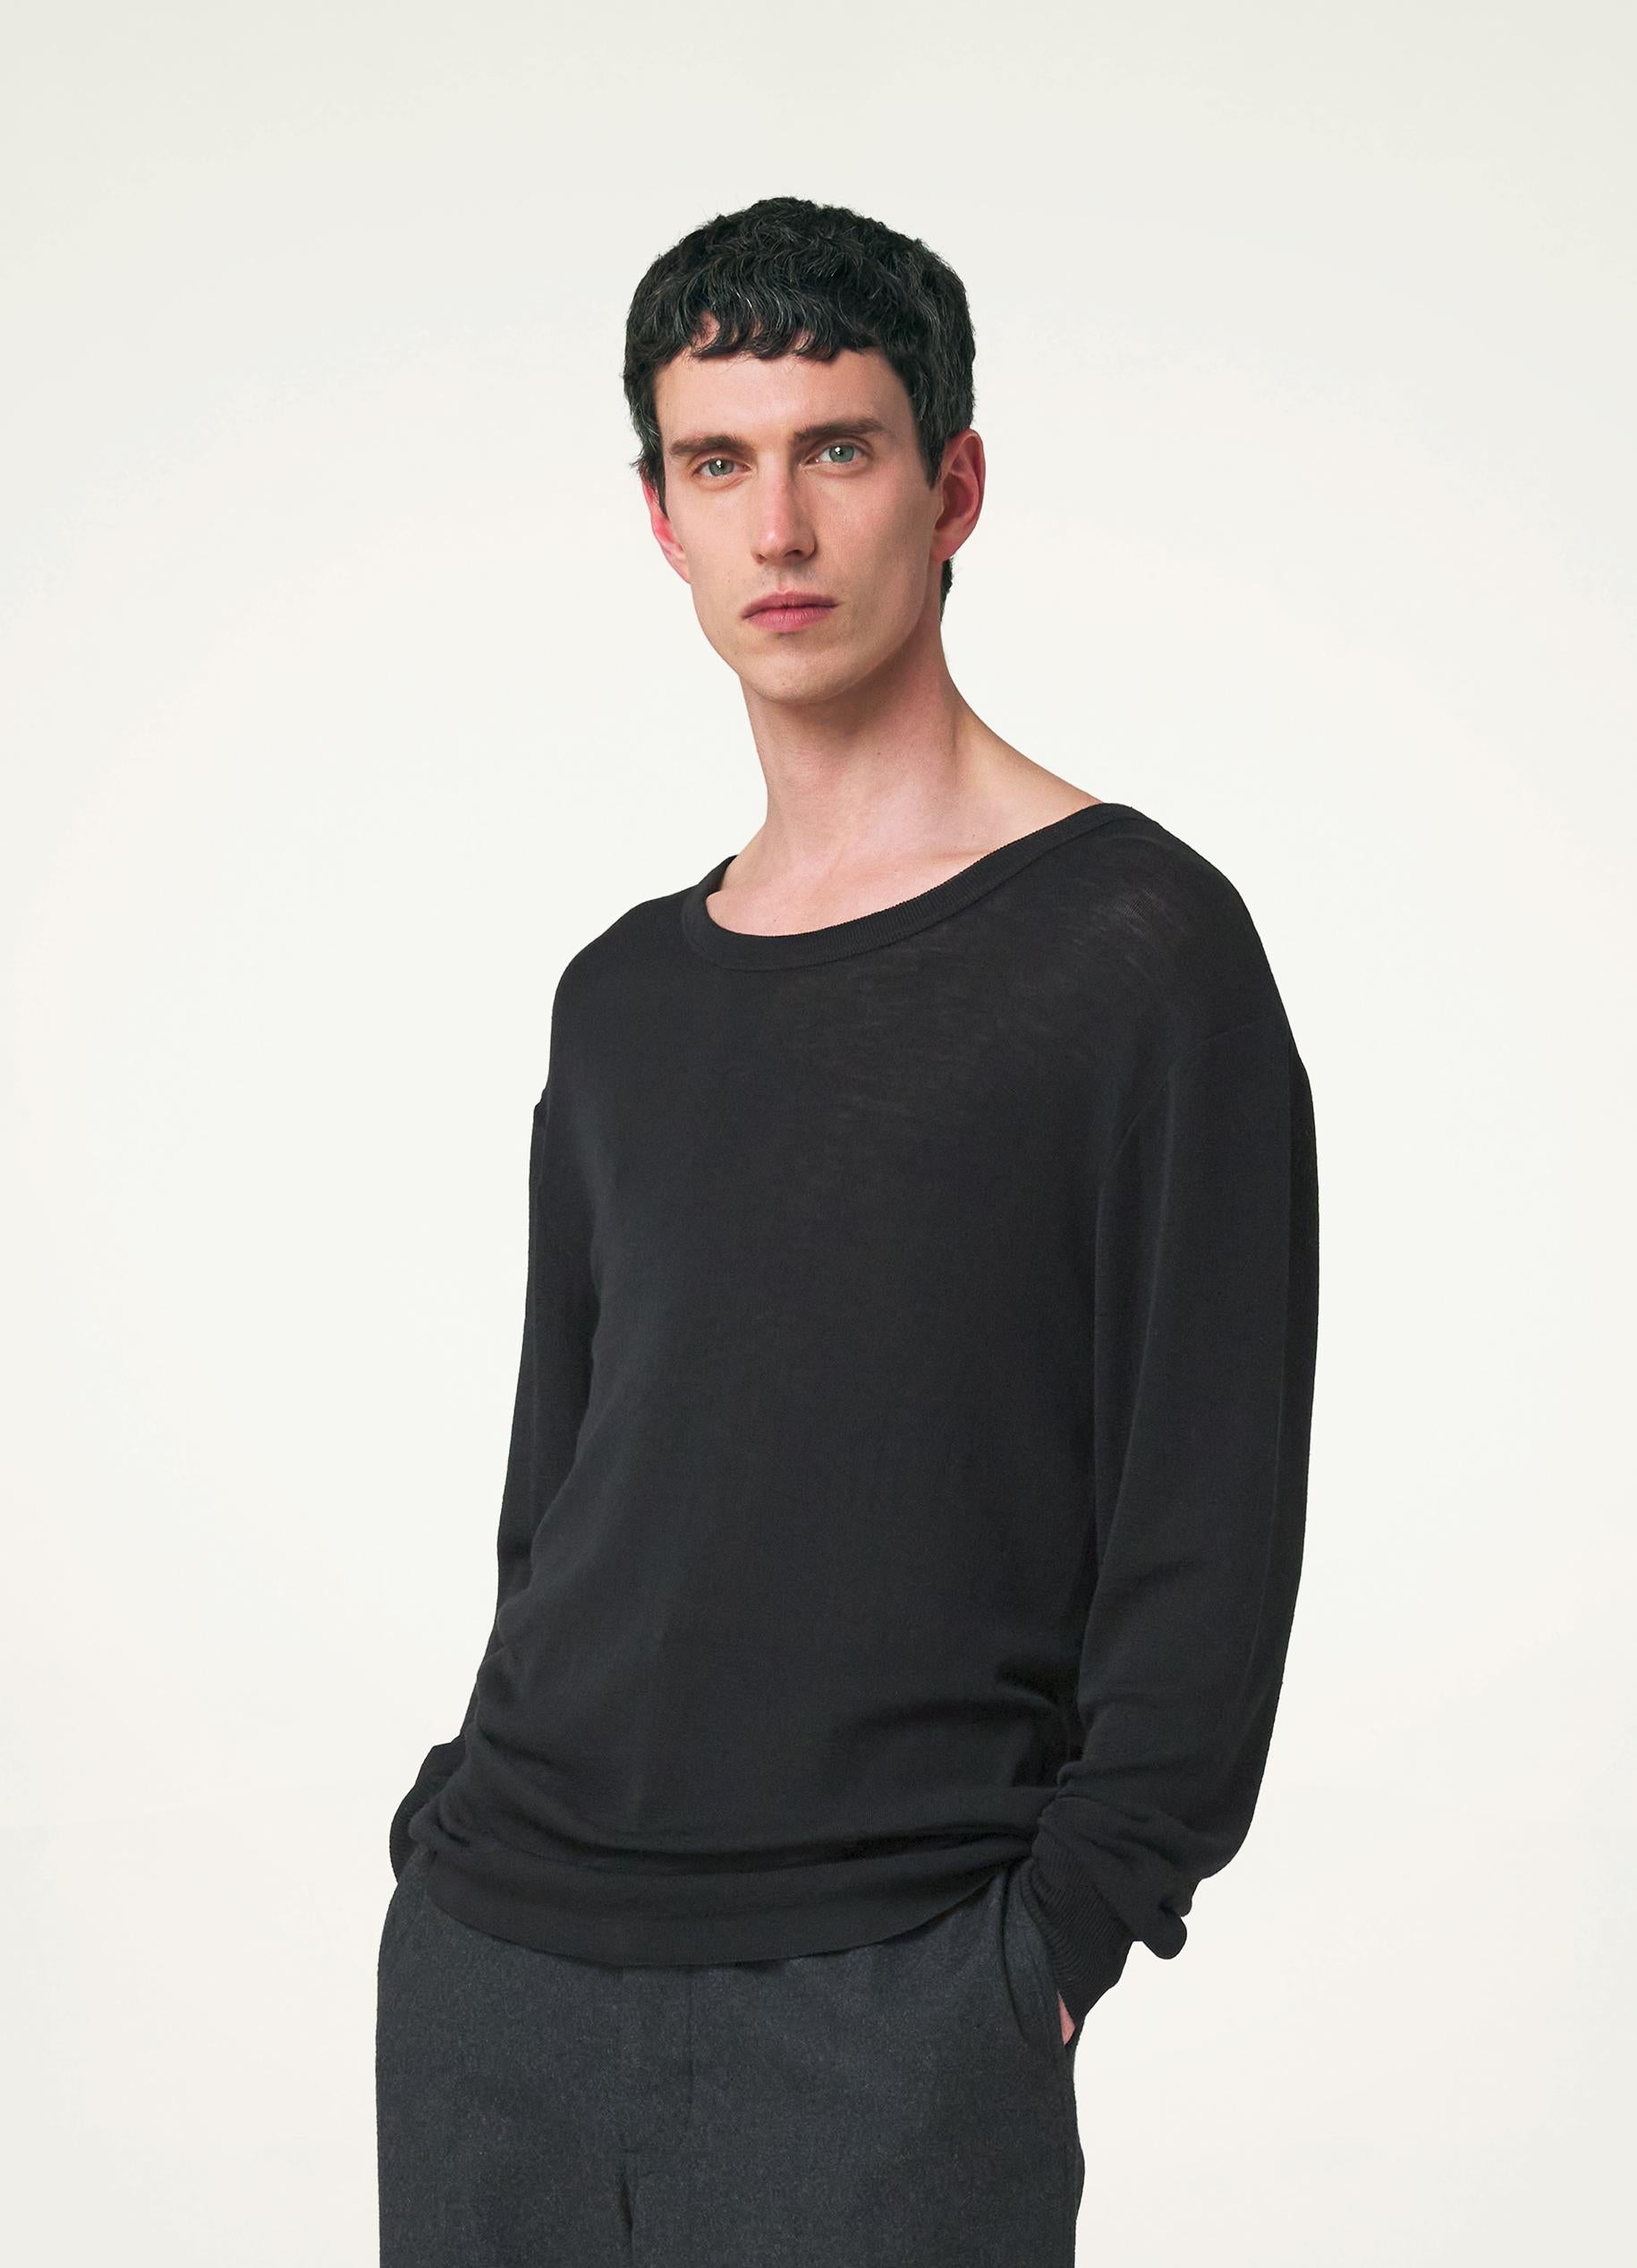 Black Seamless Long Sleeve T-Shirt in Wool Silk Jersey